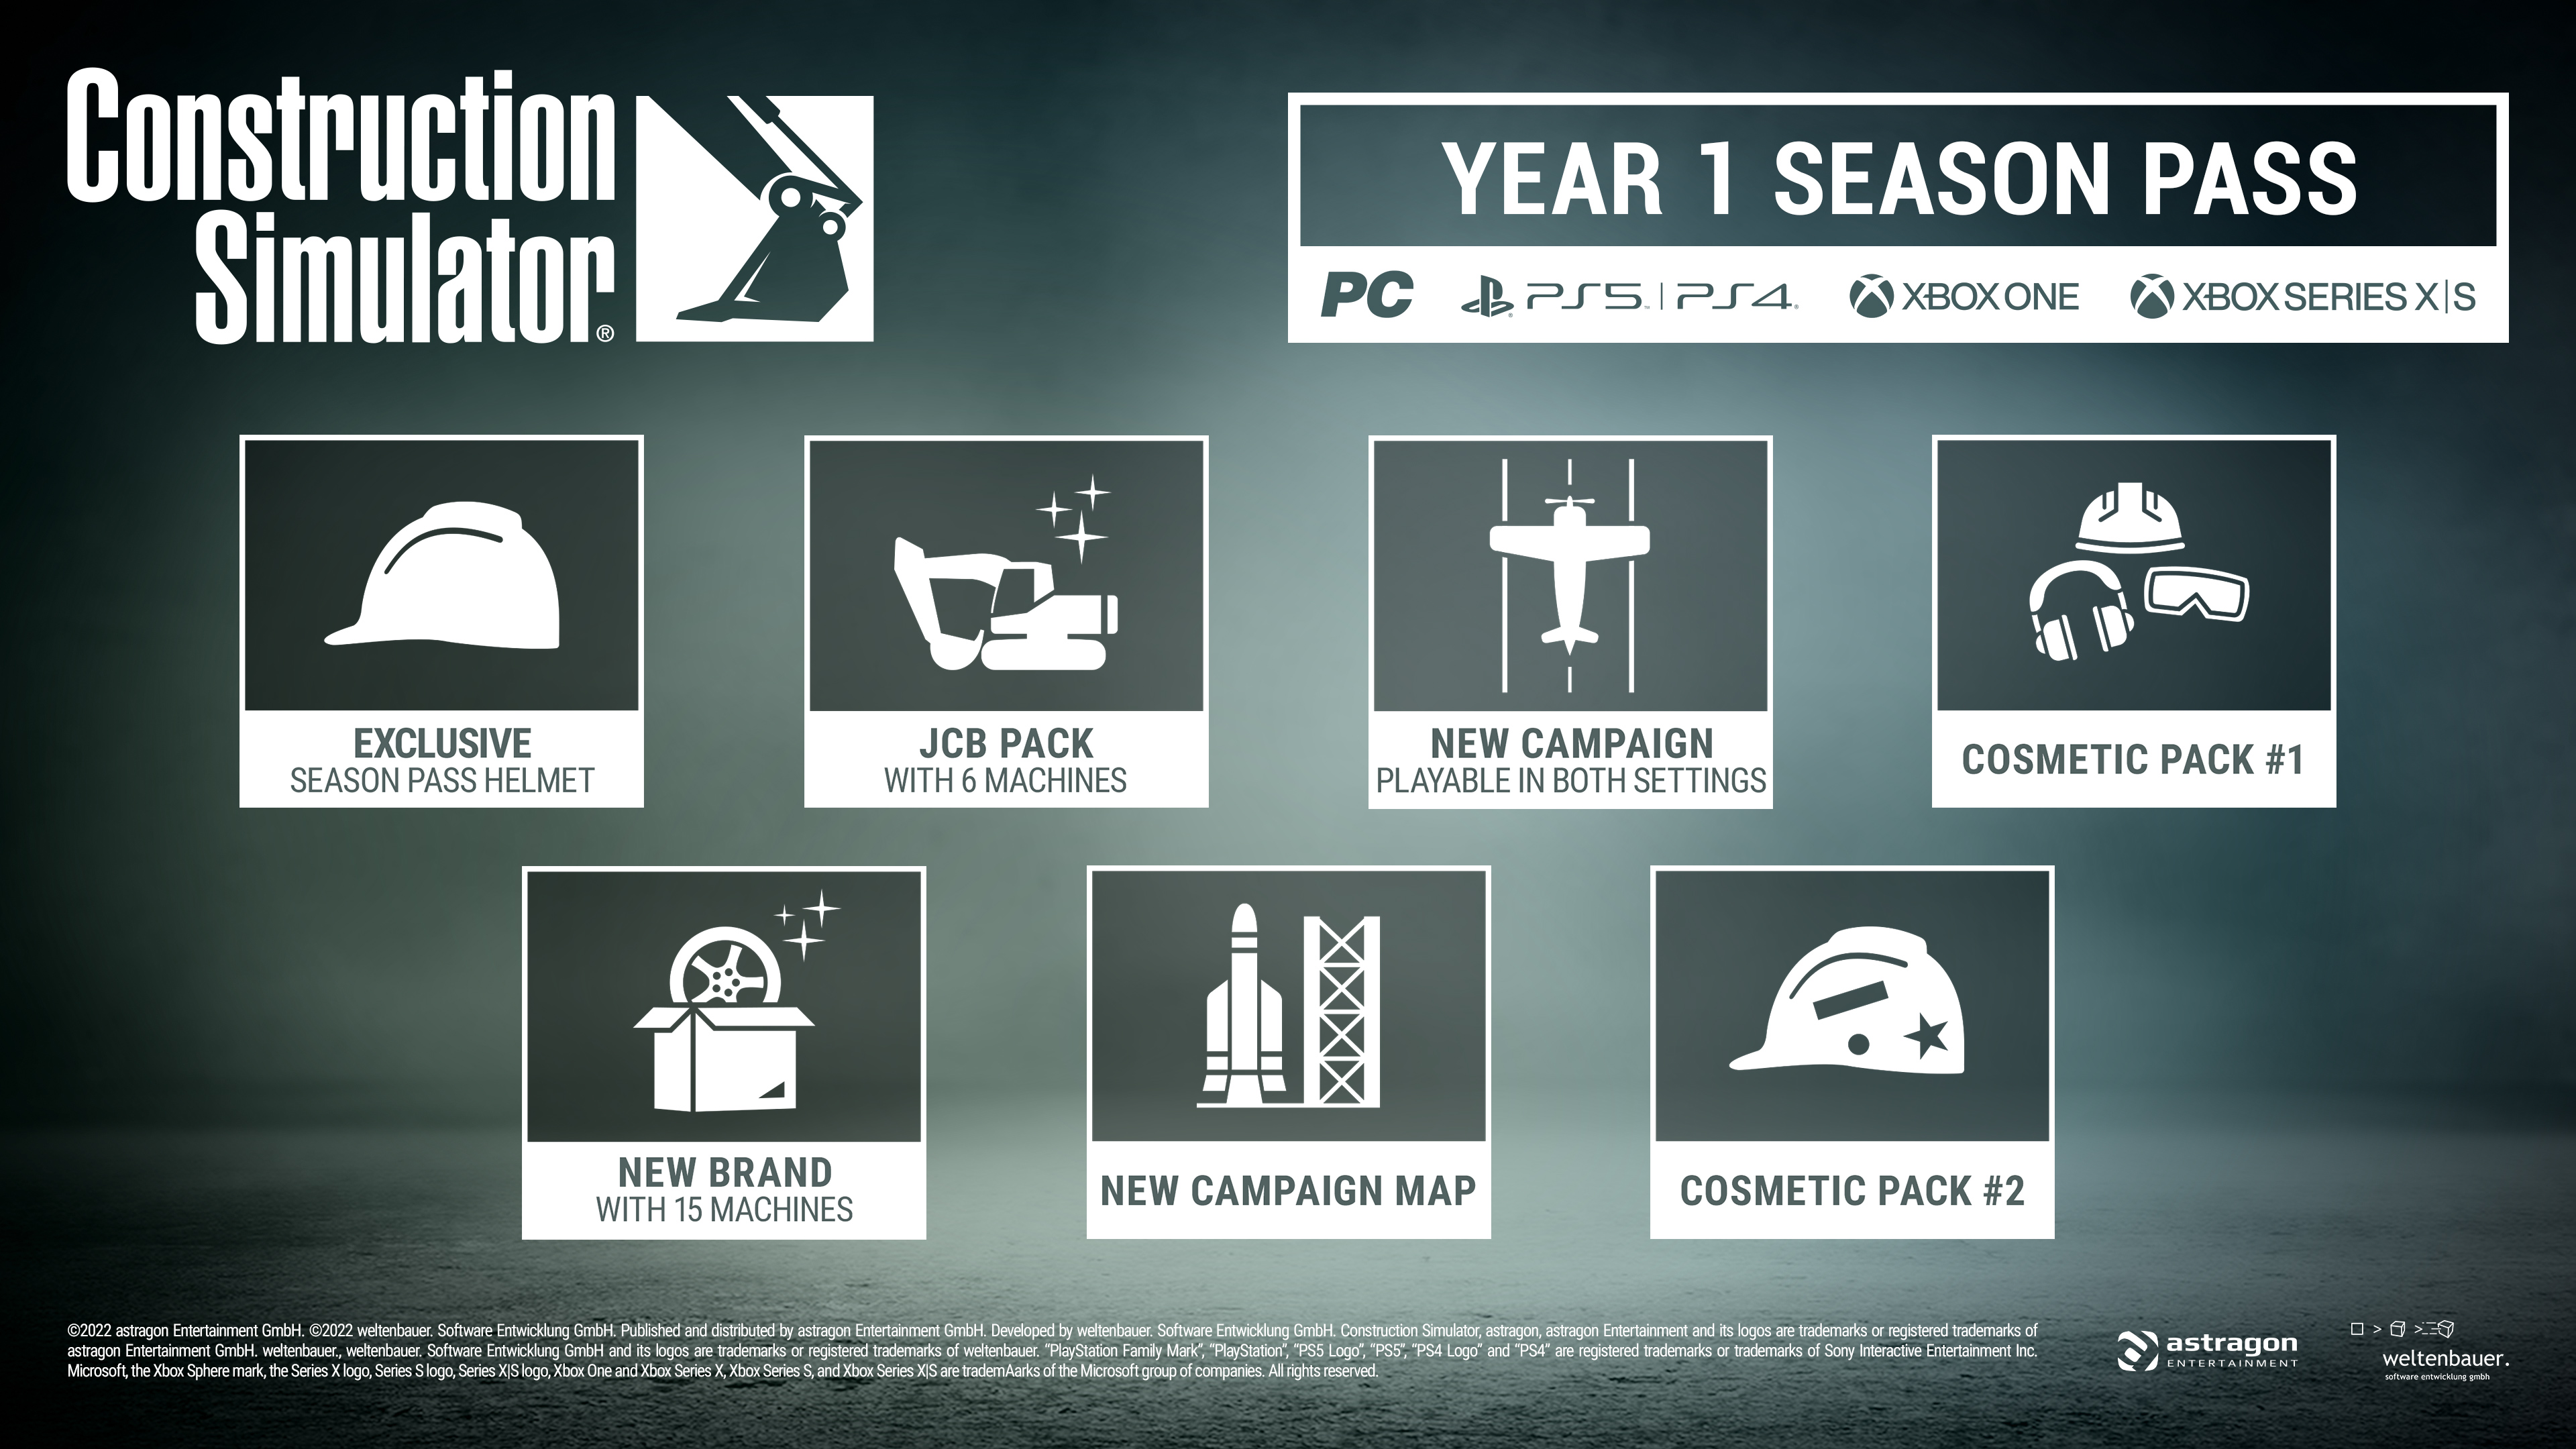 Bau-Simulator - Year 1 Season Pass